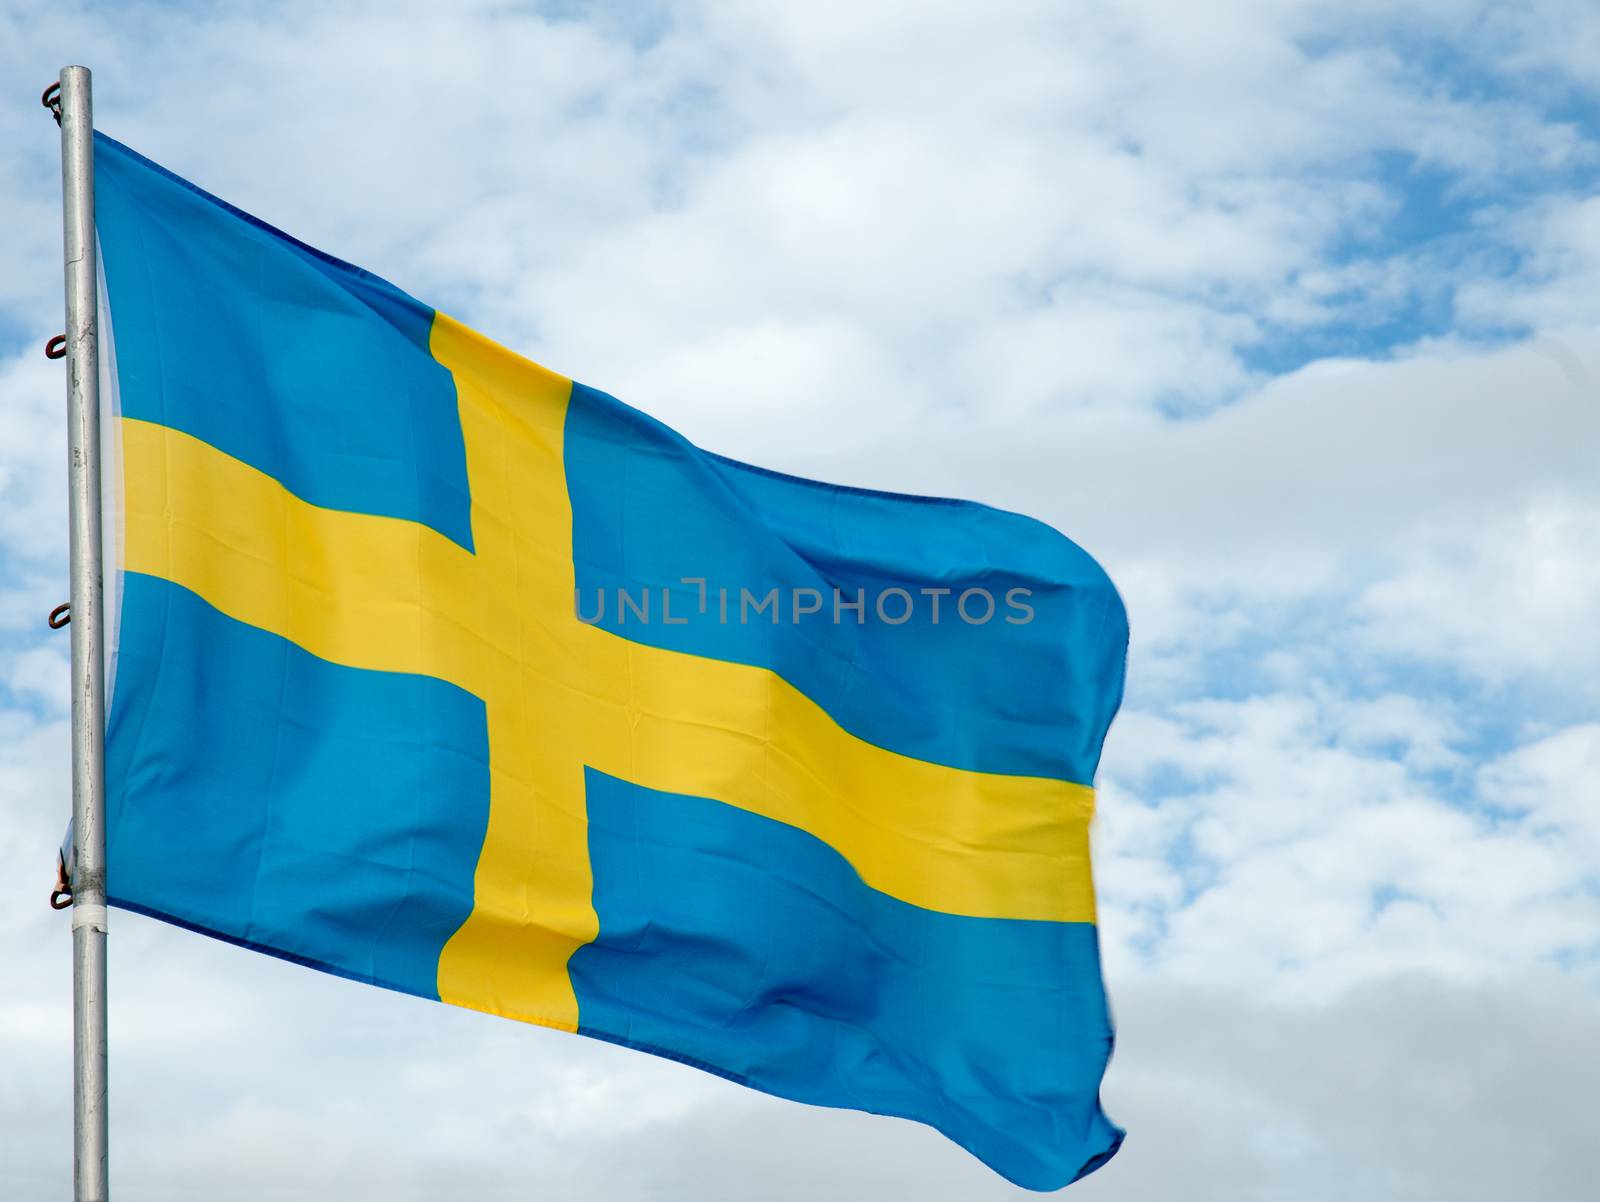 The national flag of Sweden